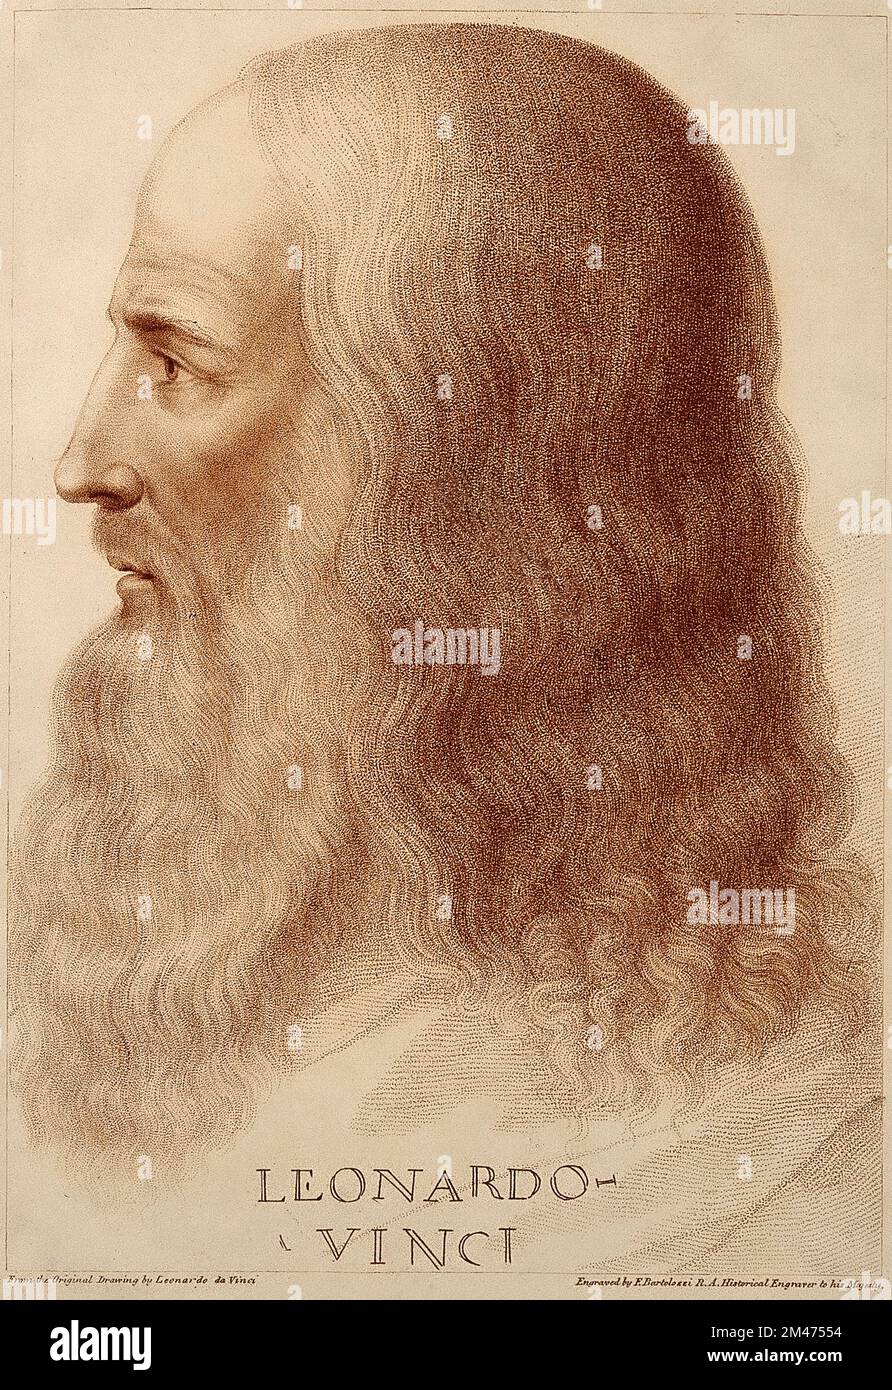 Leonardo da Vinci - Portrait de Léonard de Vinci. Gravure à l'aide de F. Bartolozzi, 1795 du dessin original bby Leonardo da Vinci Banque D'Images